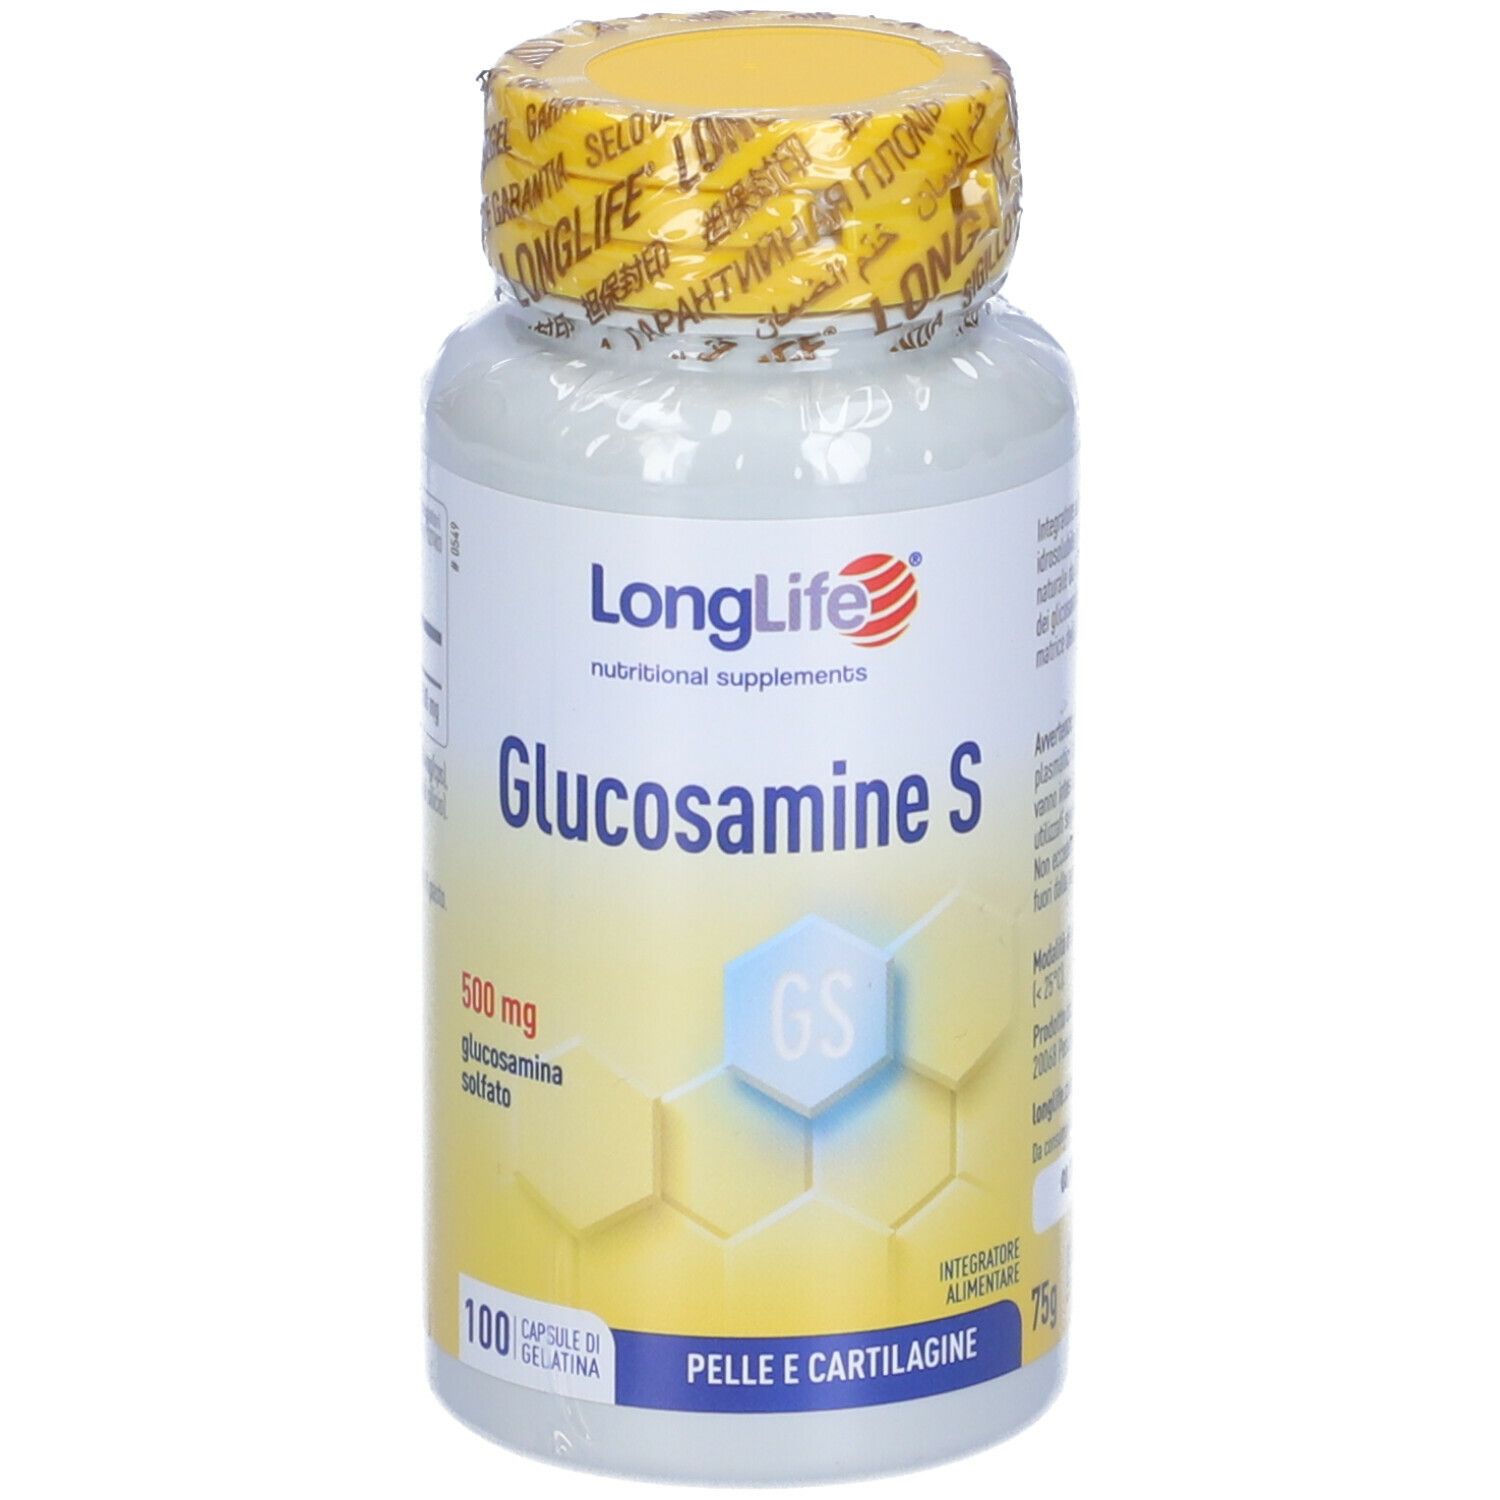 Image of LongLife® Glucosamine S 500mg